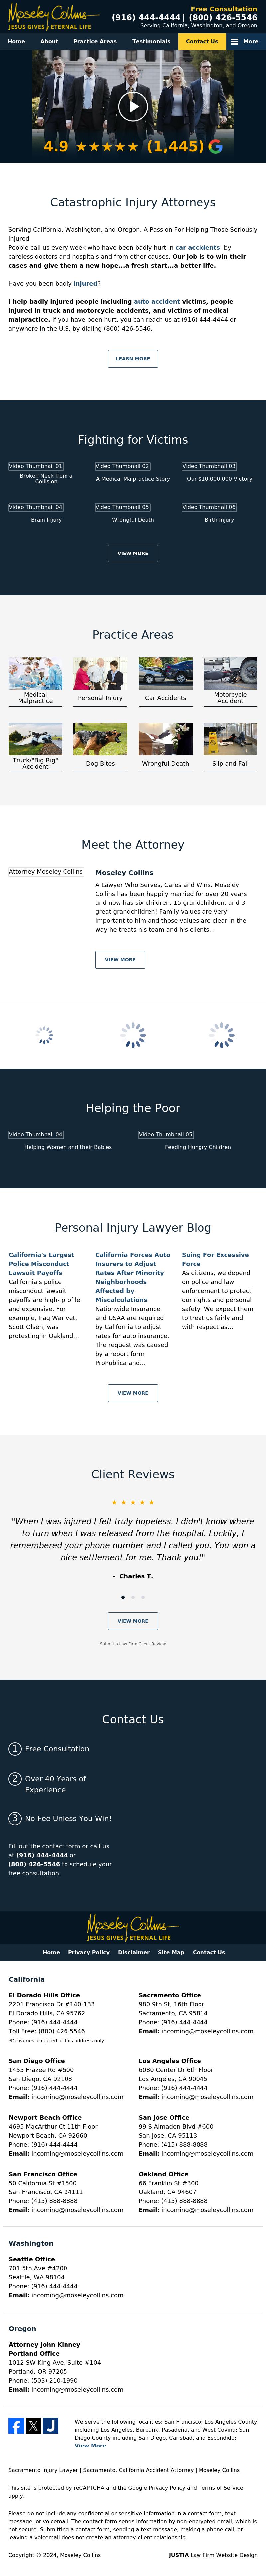 Moseley Collins - San Jose CA Lawyers